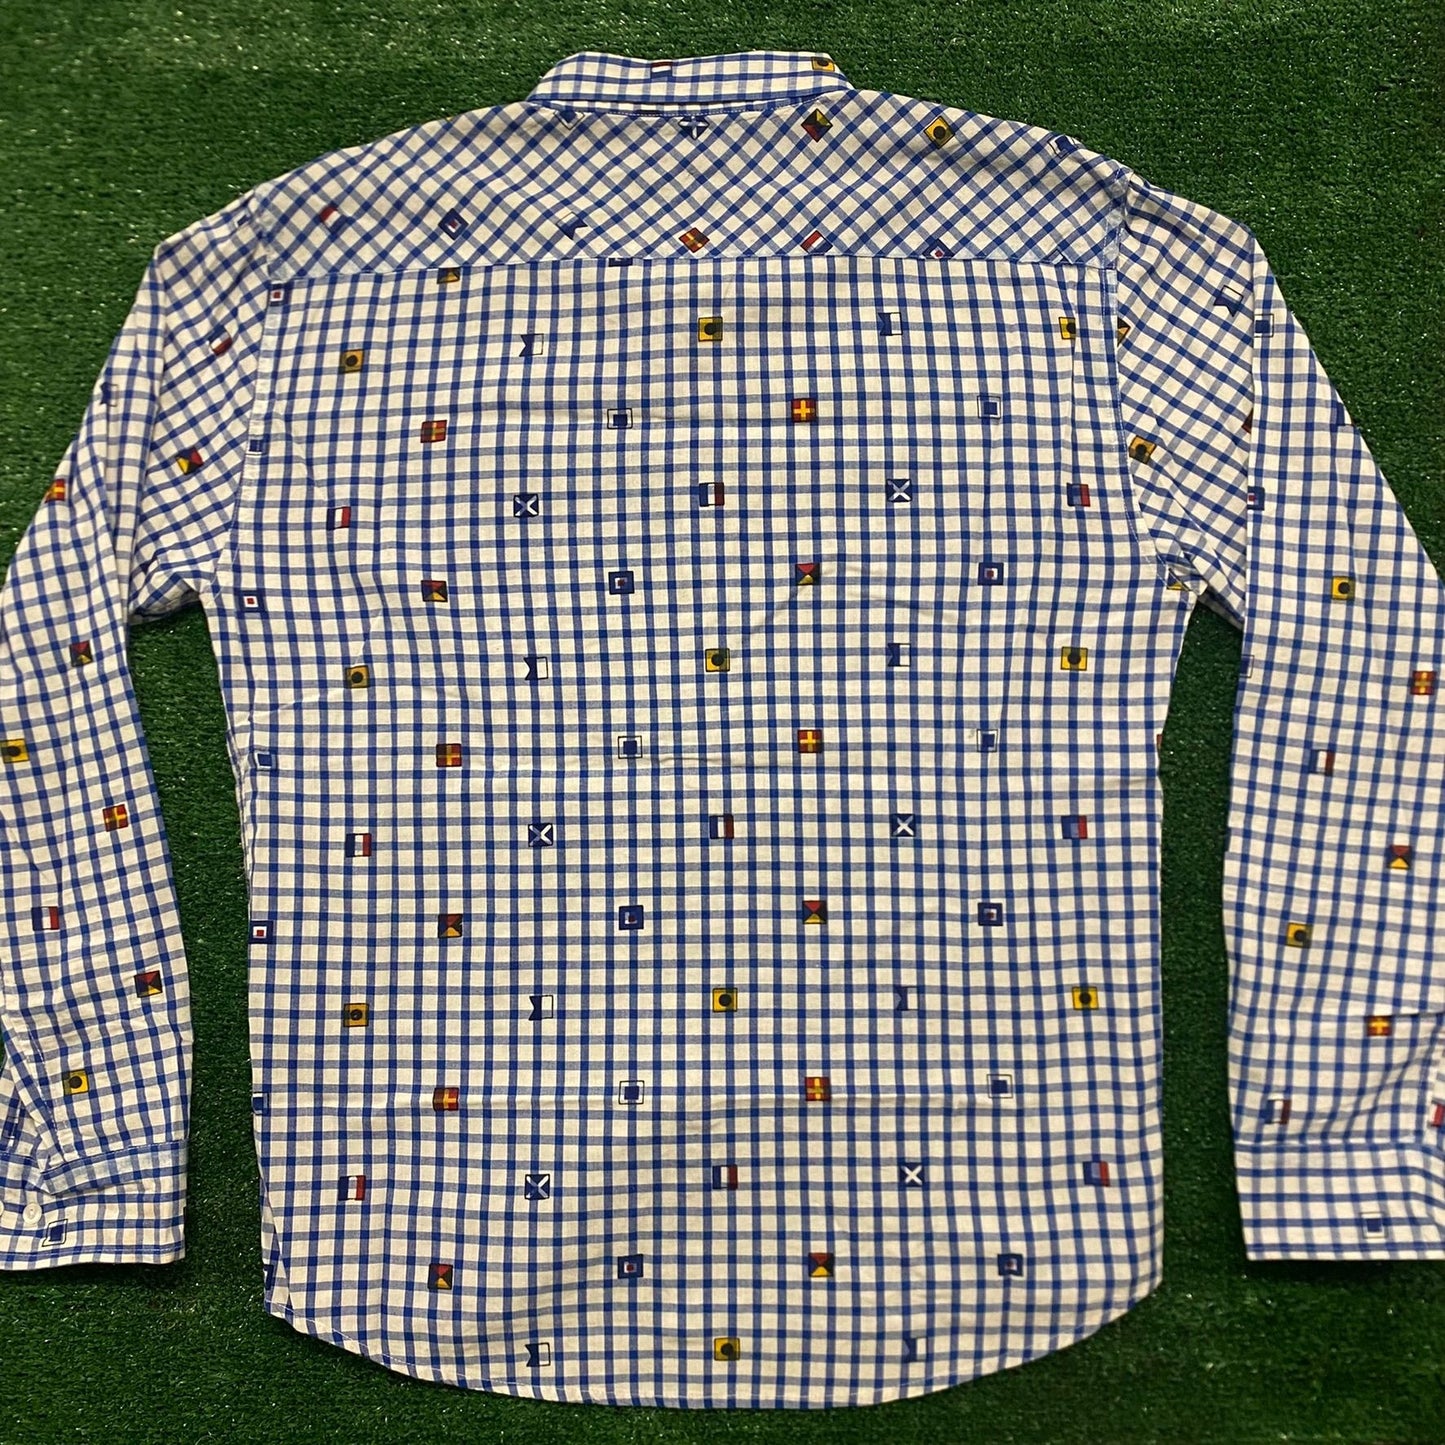 Grid Plaid Flags Vintage Preppy Button Up Oxford Shirt